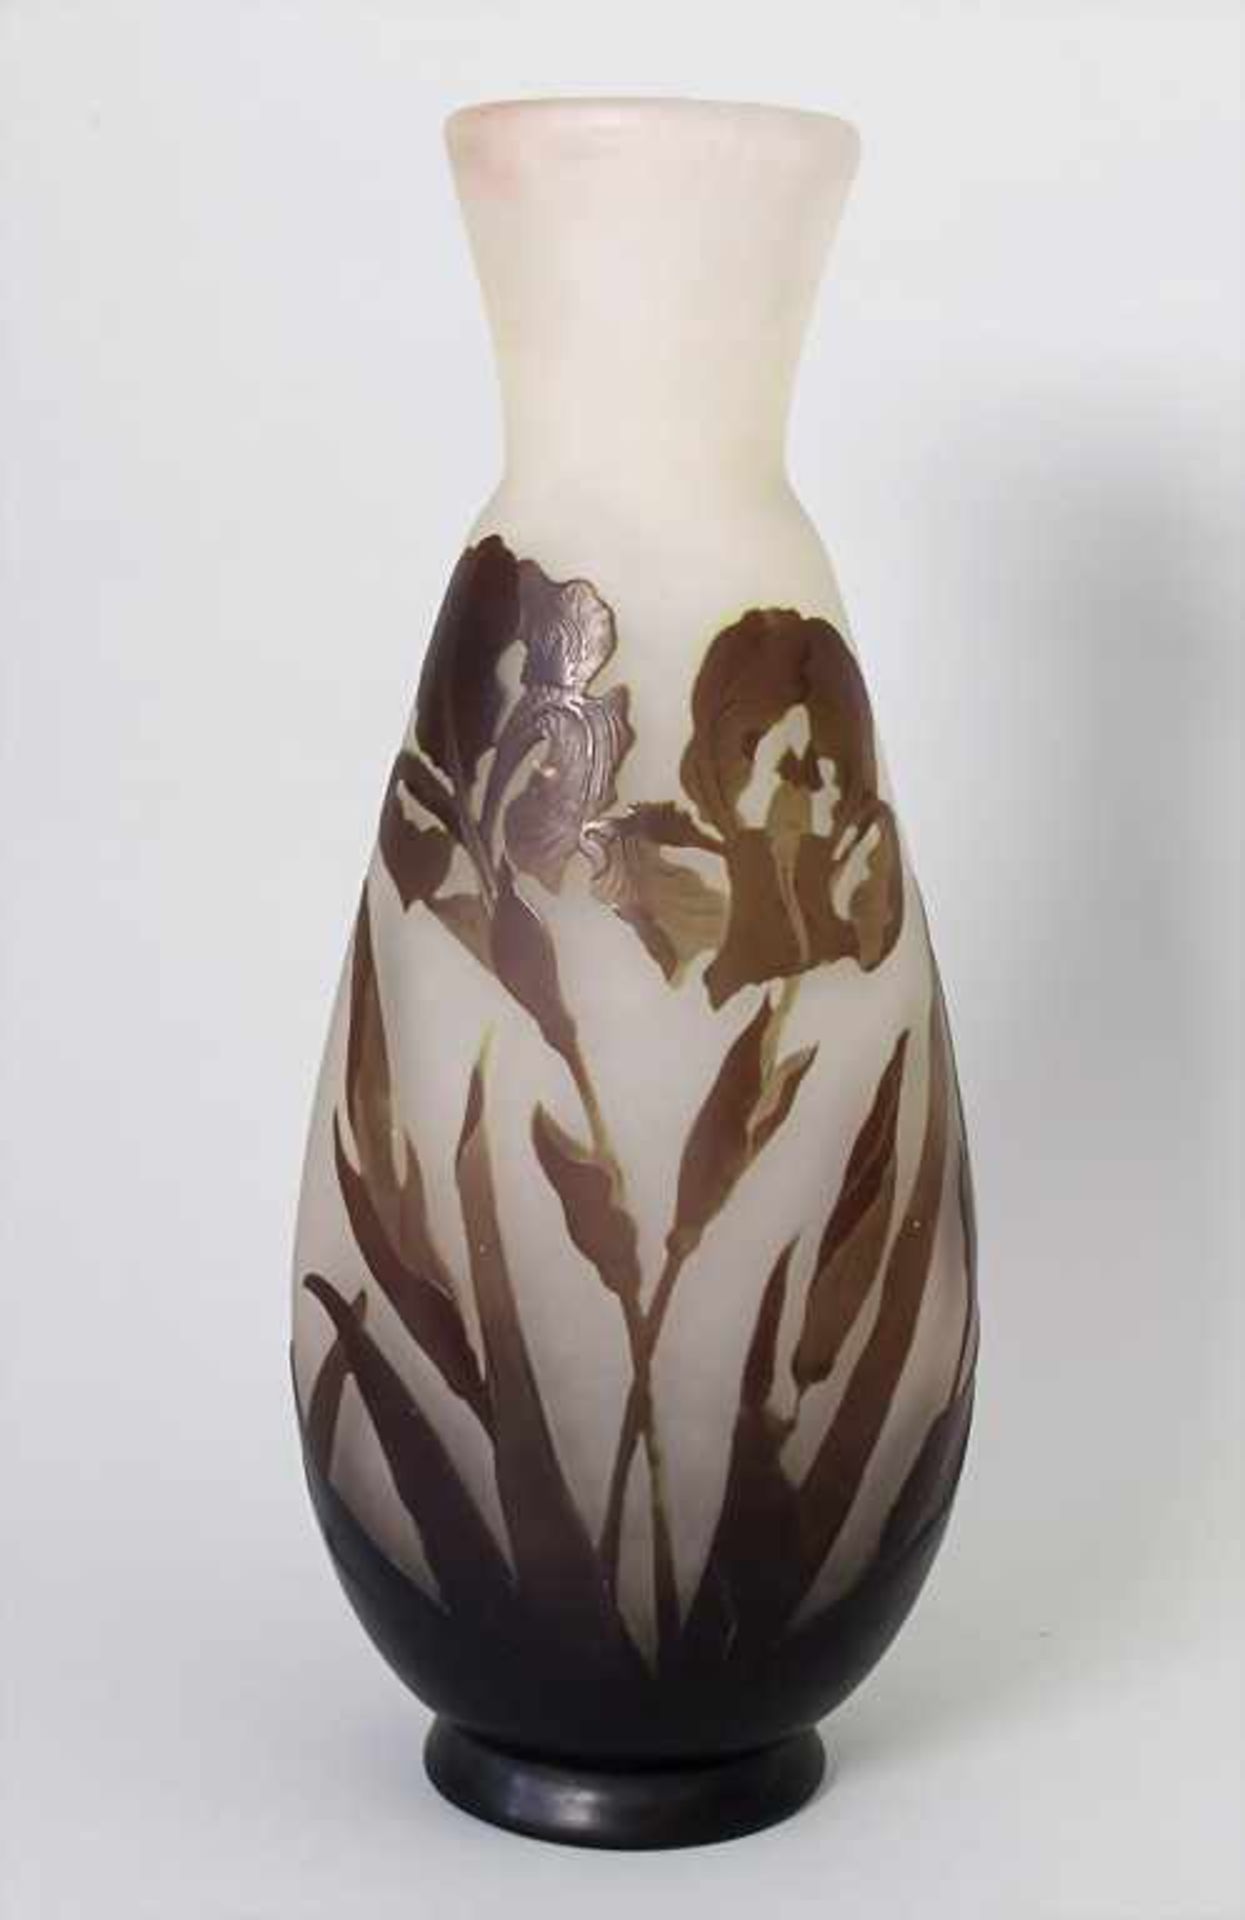 Große Jugendstil Vase mit Iris / An Art Nouveau large vase with iris, Emile Gallé, Ecole de Nancy,